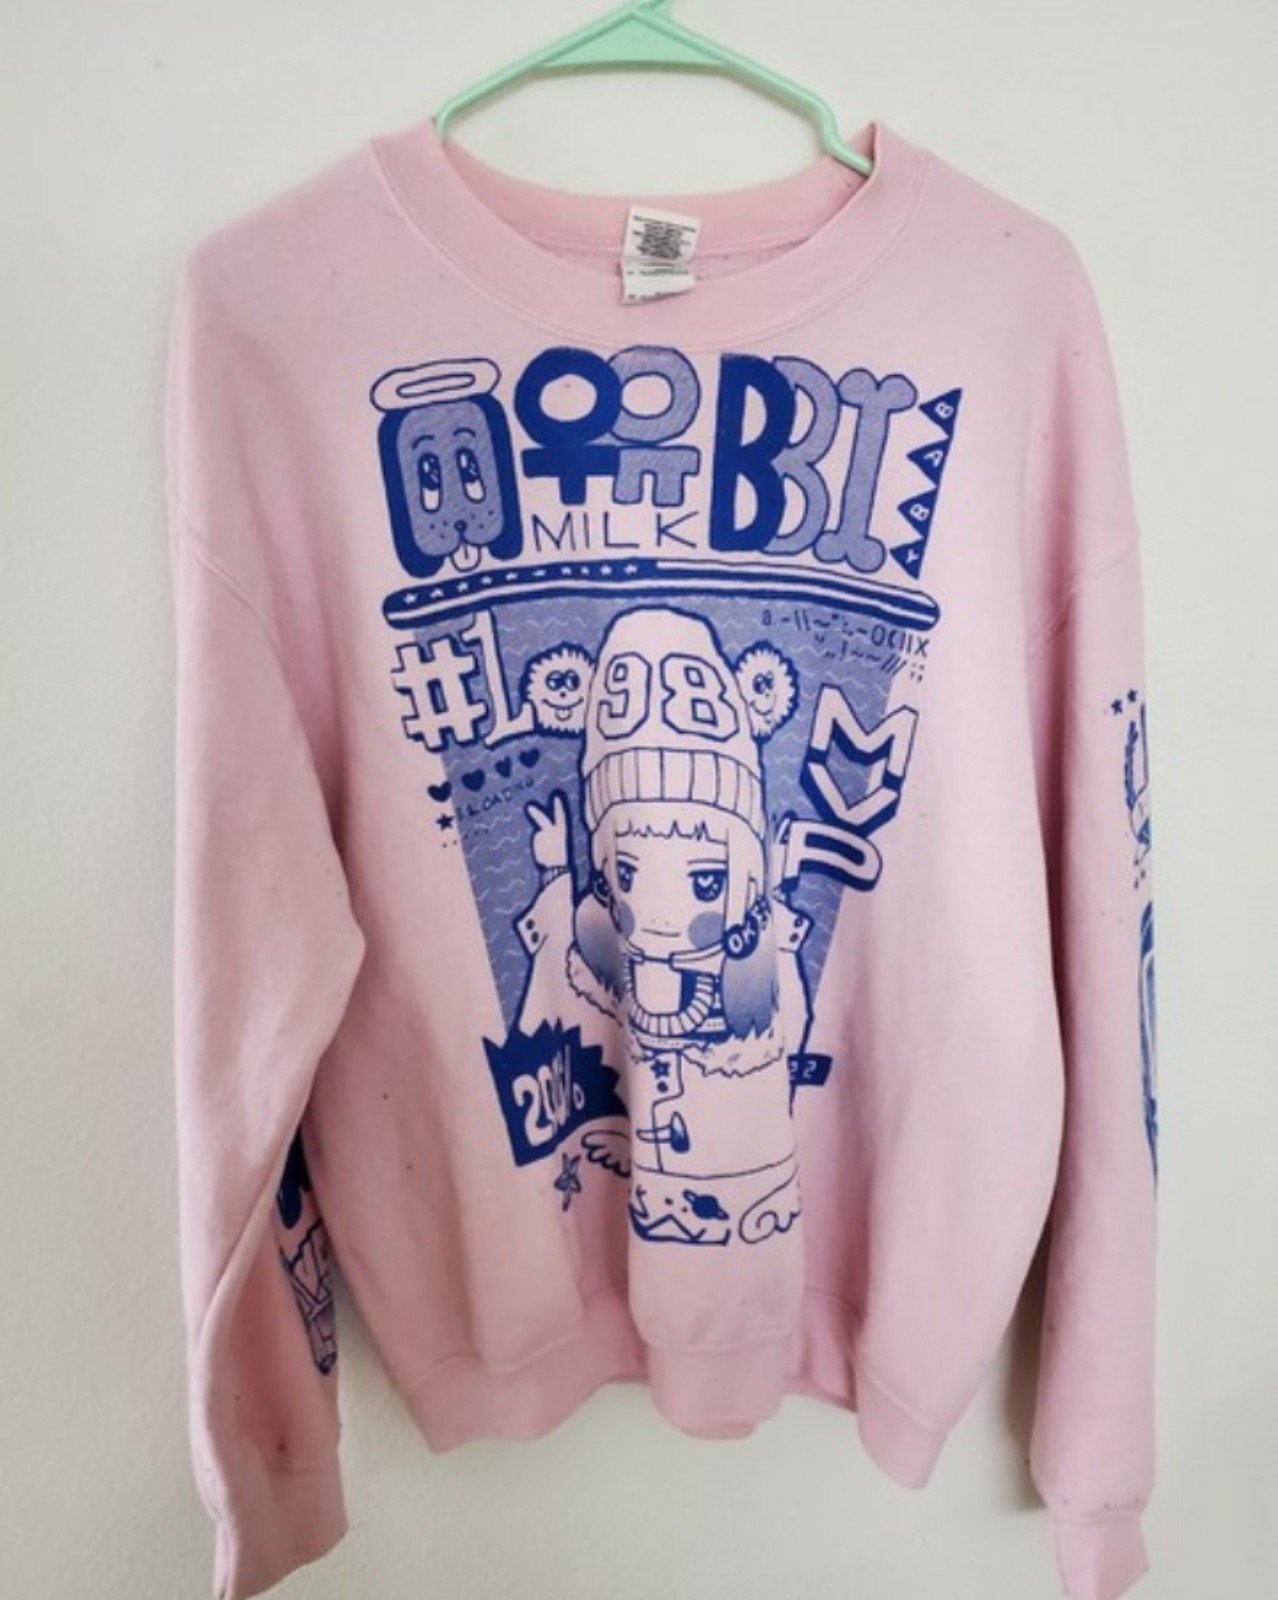 Stylish Milkbbi ultimate sweatshirt pink size small RAR